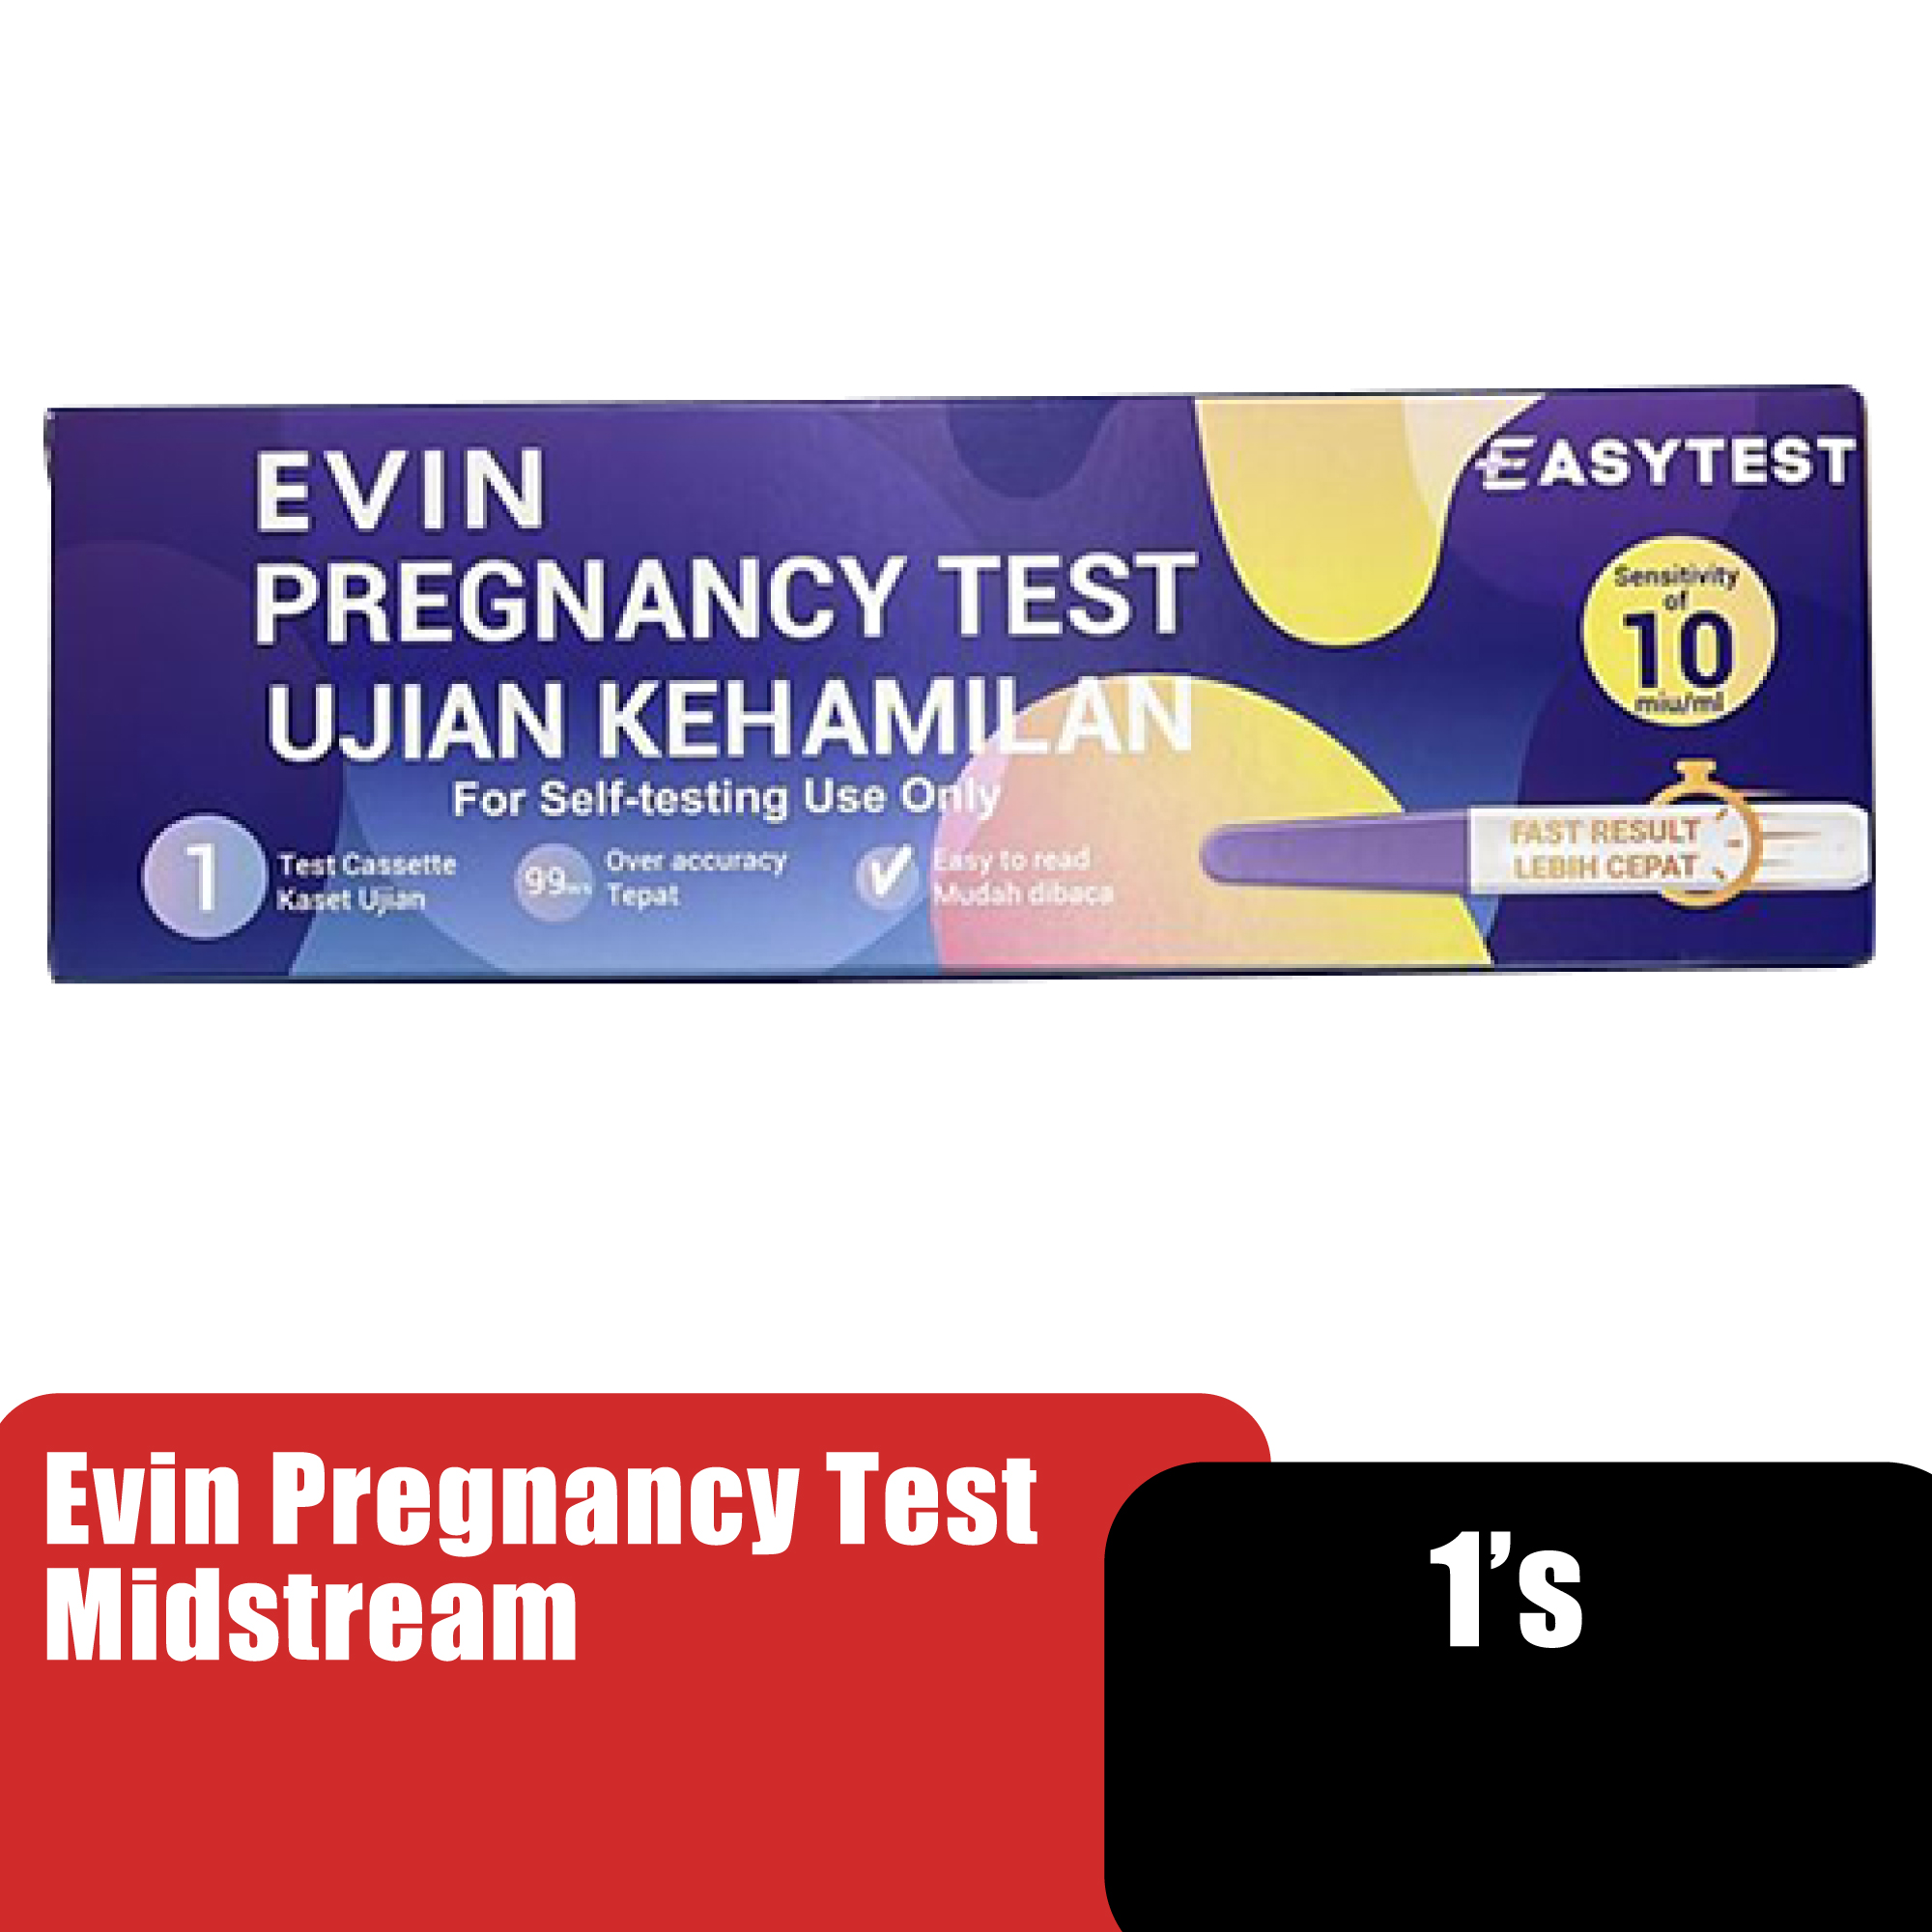 EVIN PREGNANCY TEST MIDSTREAM 1S